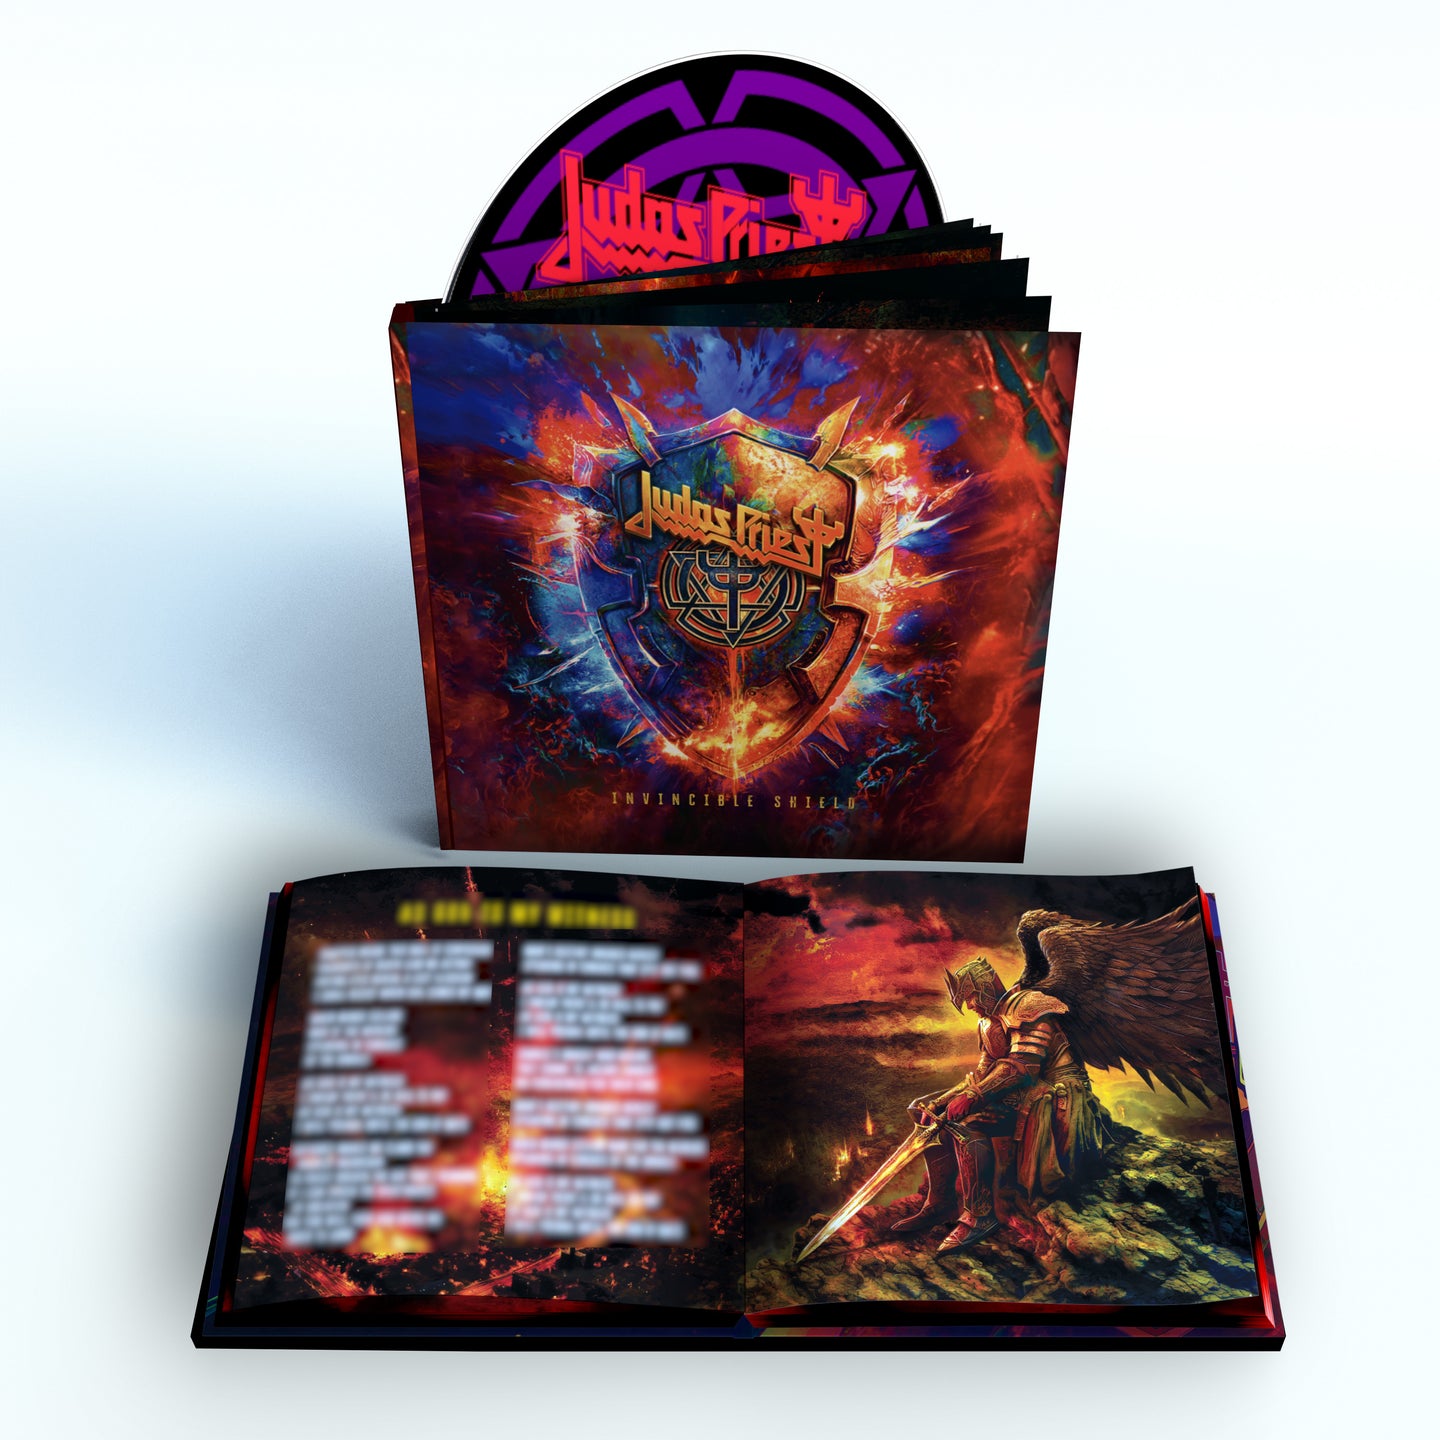 Invincible Shield Deluxe CD